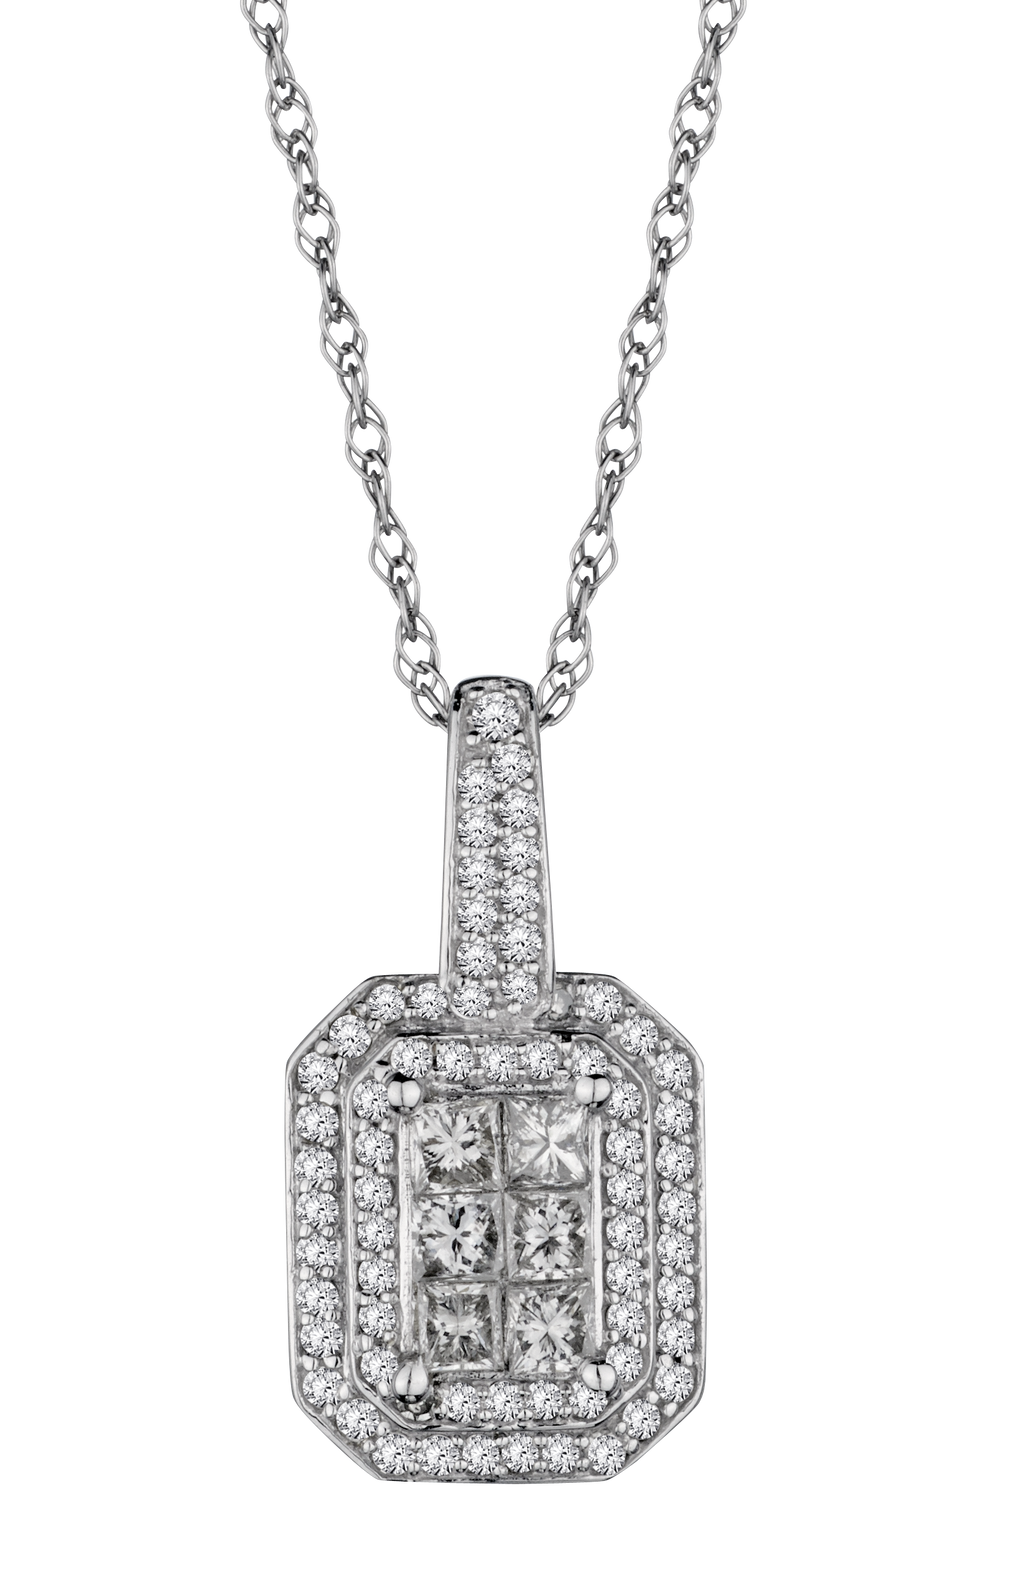 .50 Carat of Diamonds "Prestige" Pendant, 14kt White Gold.....................NOW